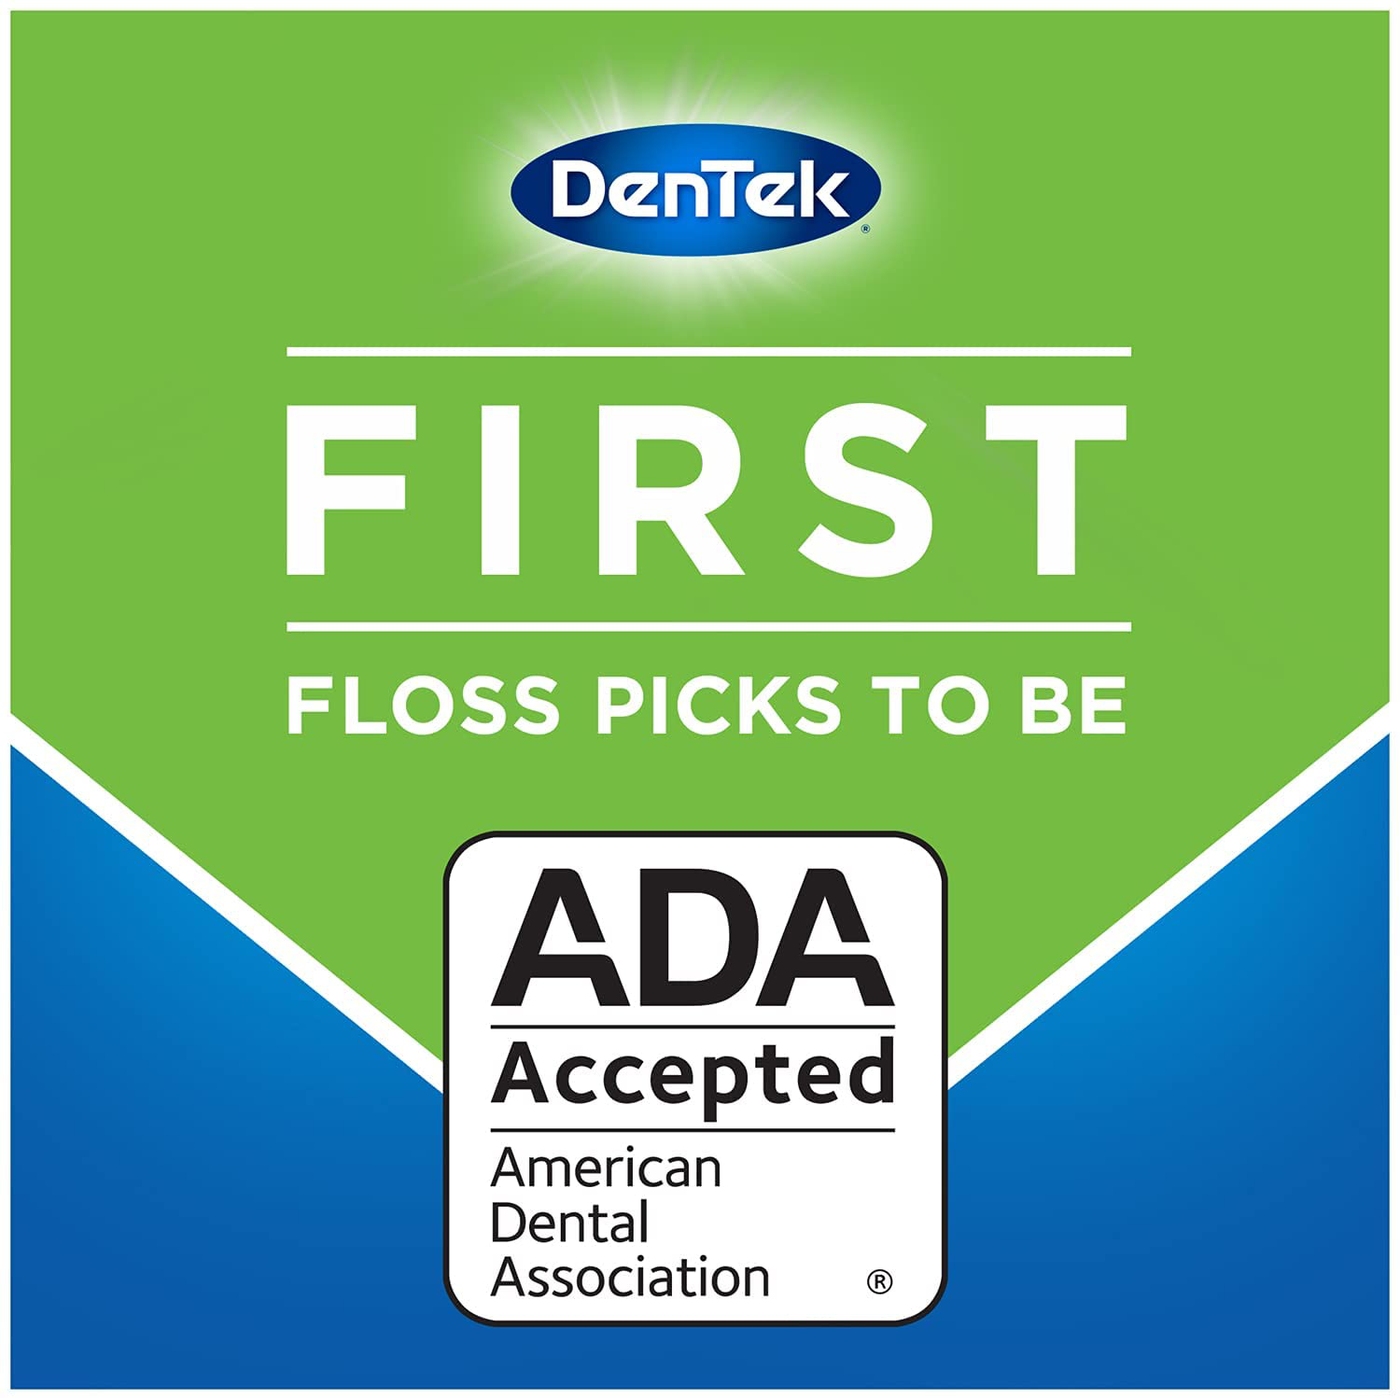 DenTek Triple Clean Advanced Clean Floss Picks, No Break & No Shred Floss, 75 Count, 3 Pack